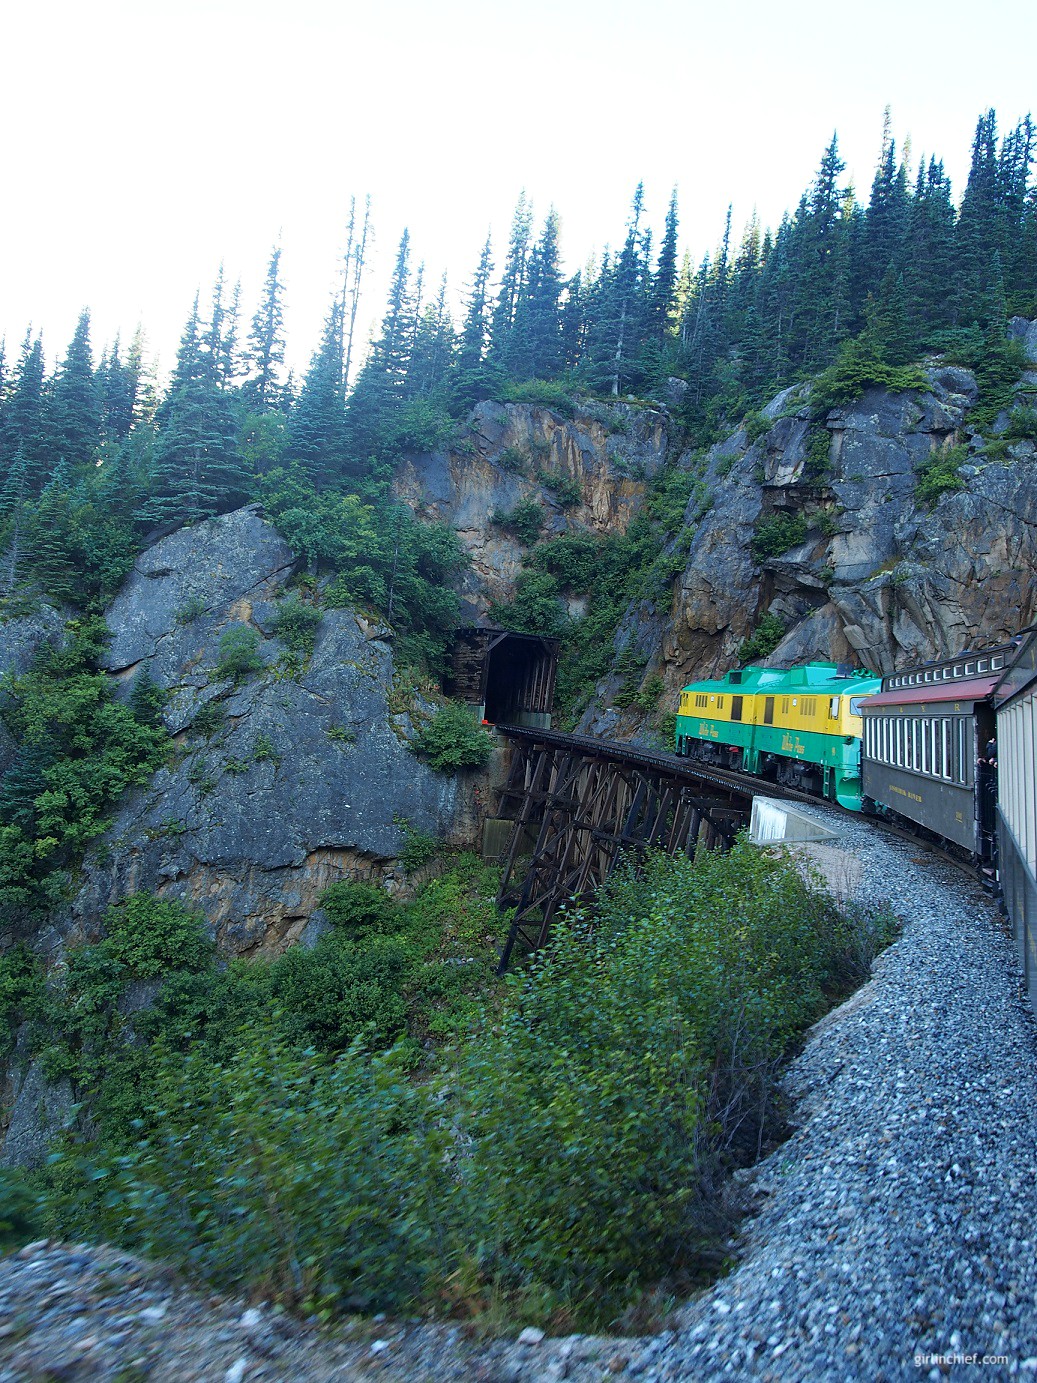 Alaska Cruise : Seeing Alaska's Beauty by Train on the White Pass & Yukon Rail